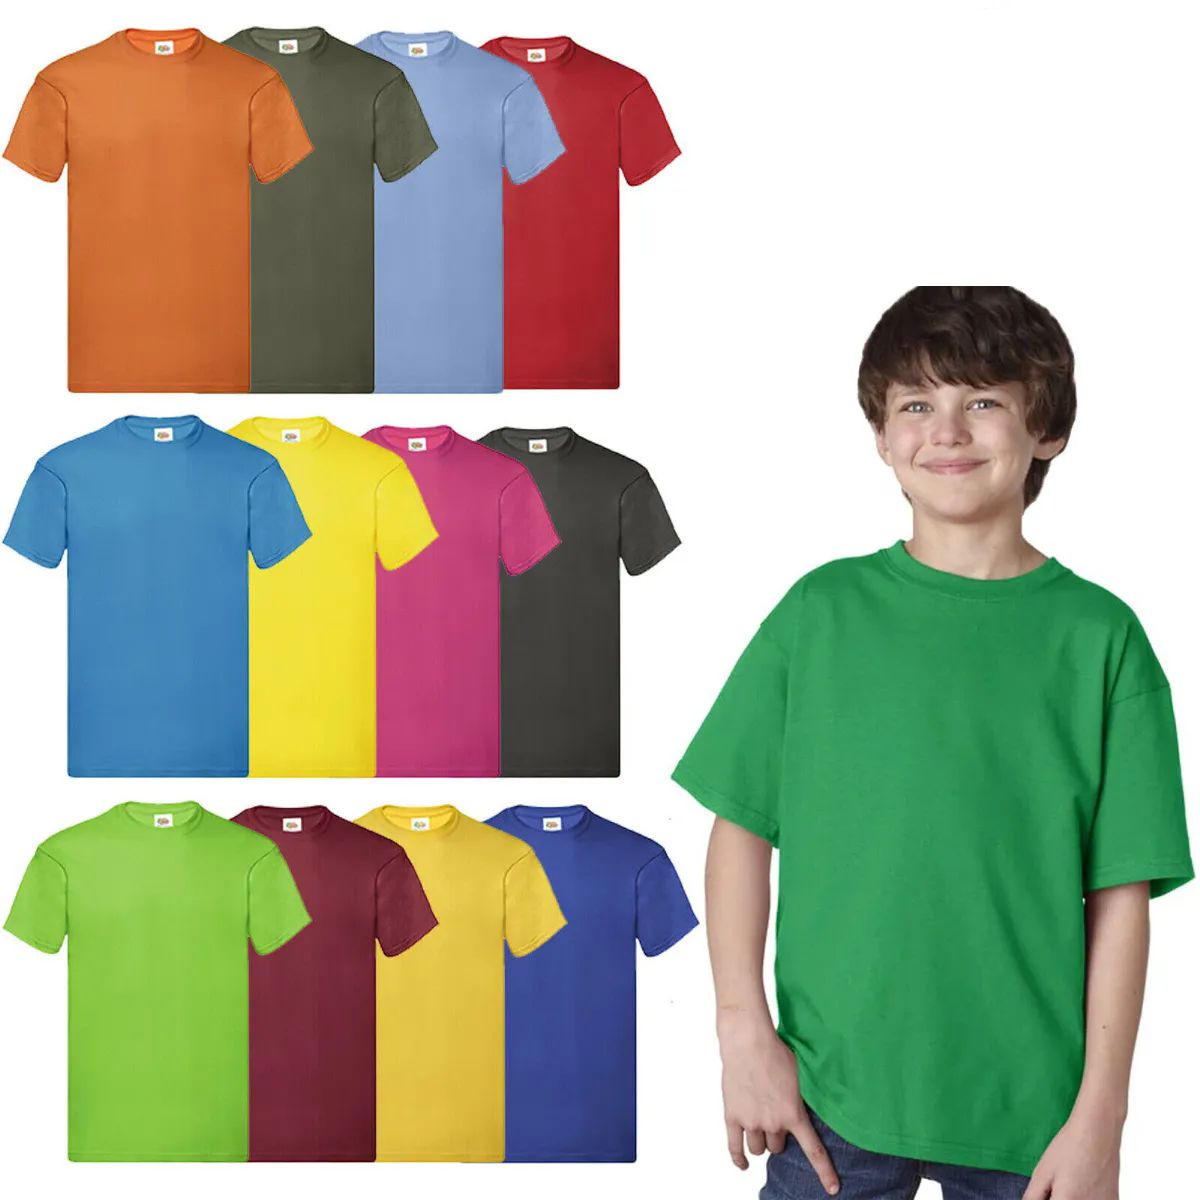 504 Wholesale Billion Hats Kids Youth Cotton Assorted Colors T Shirts Size xs